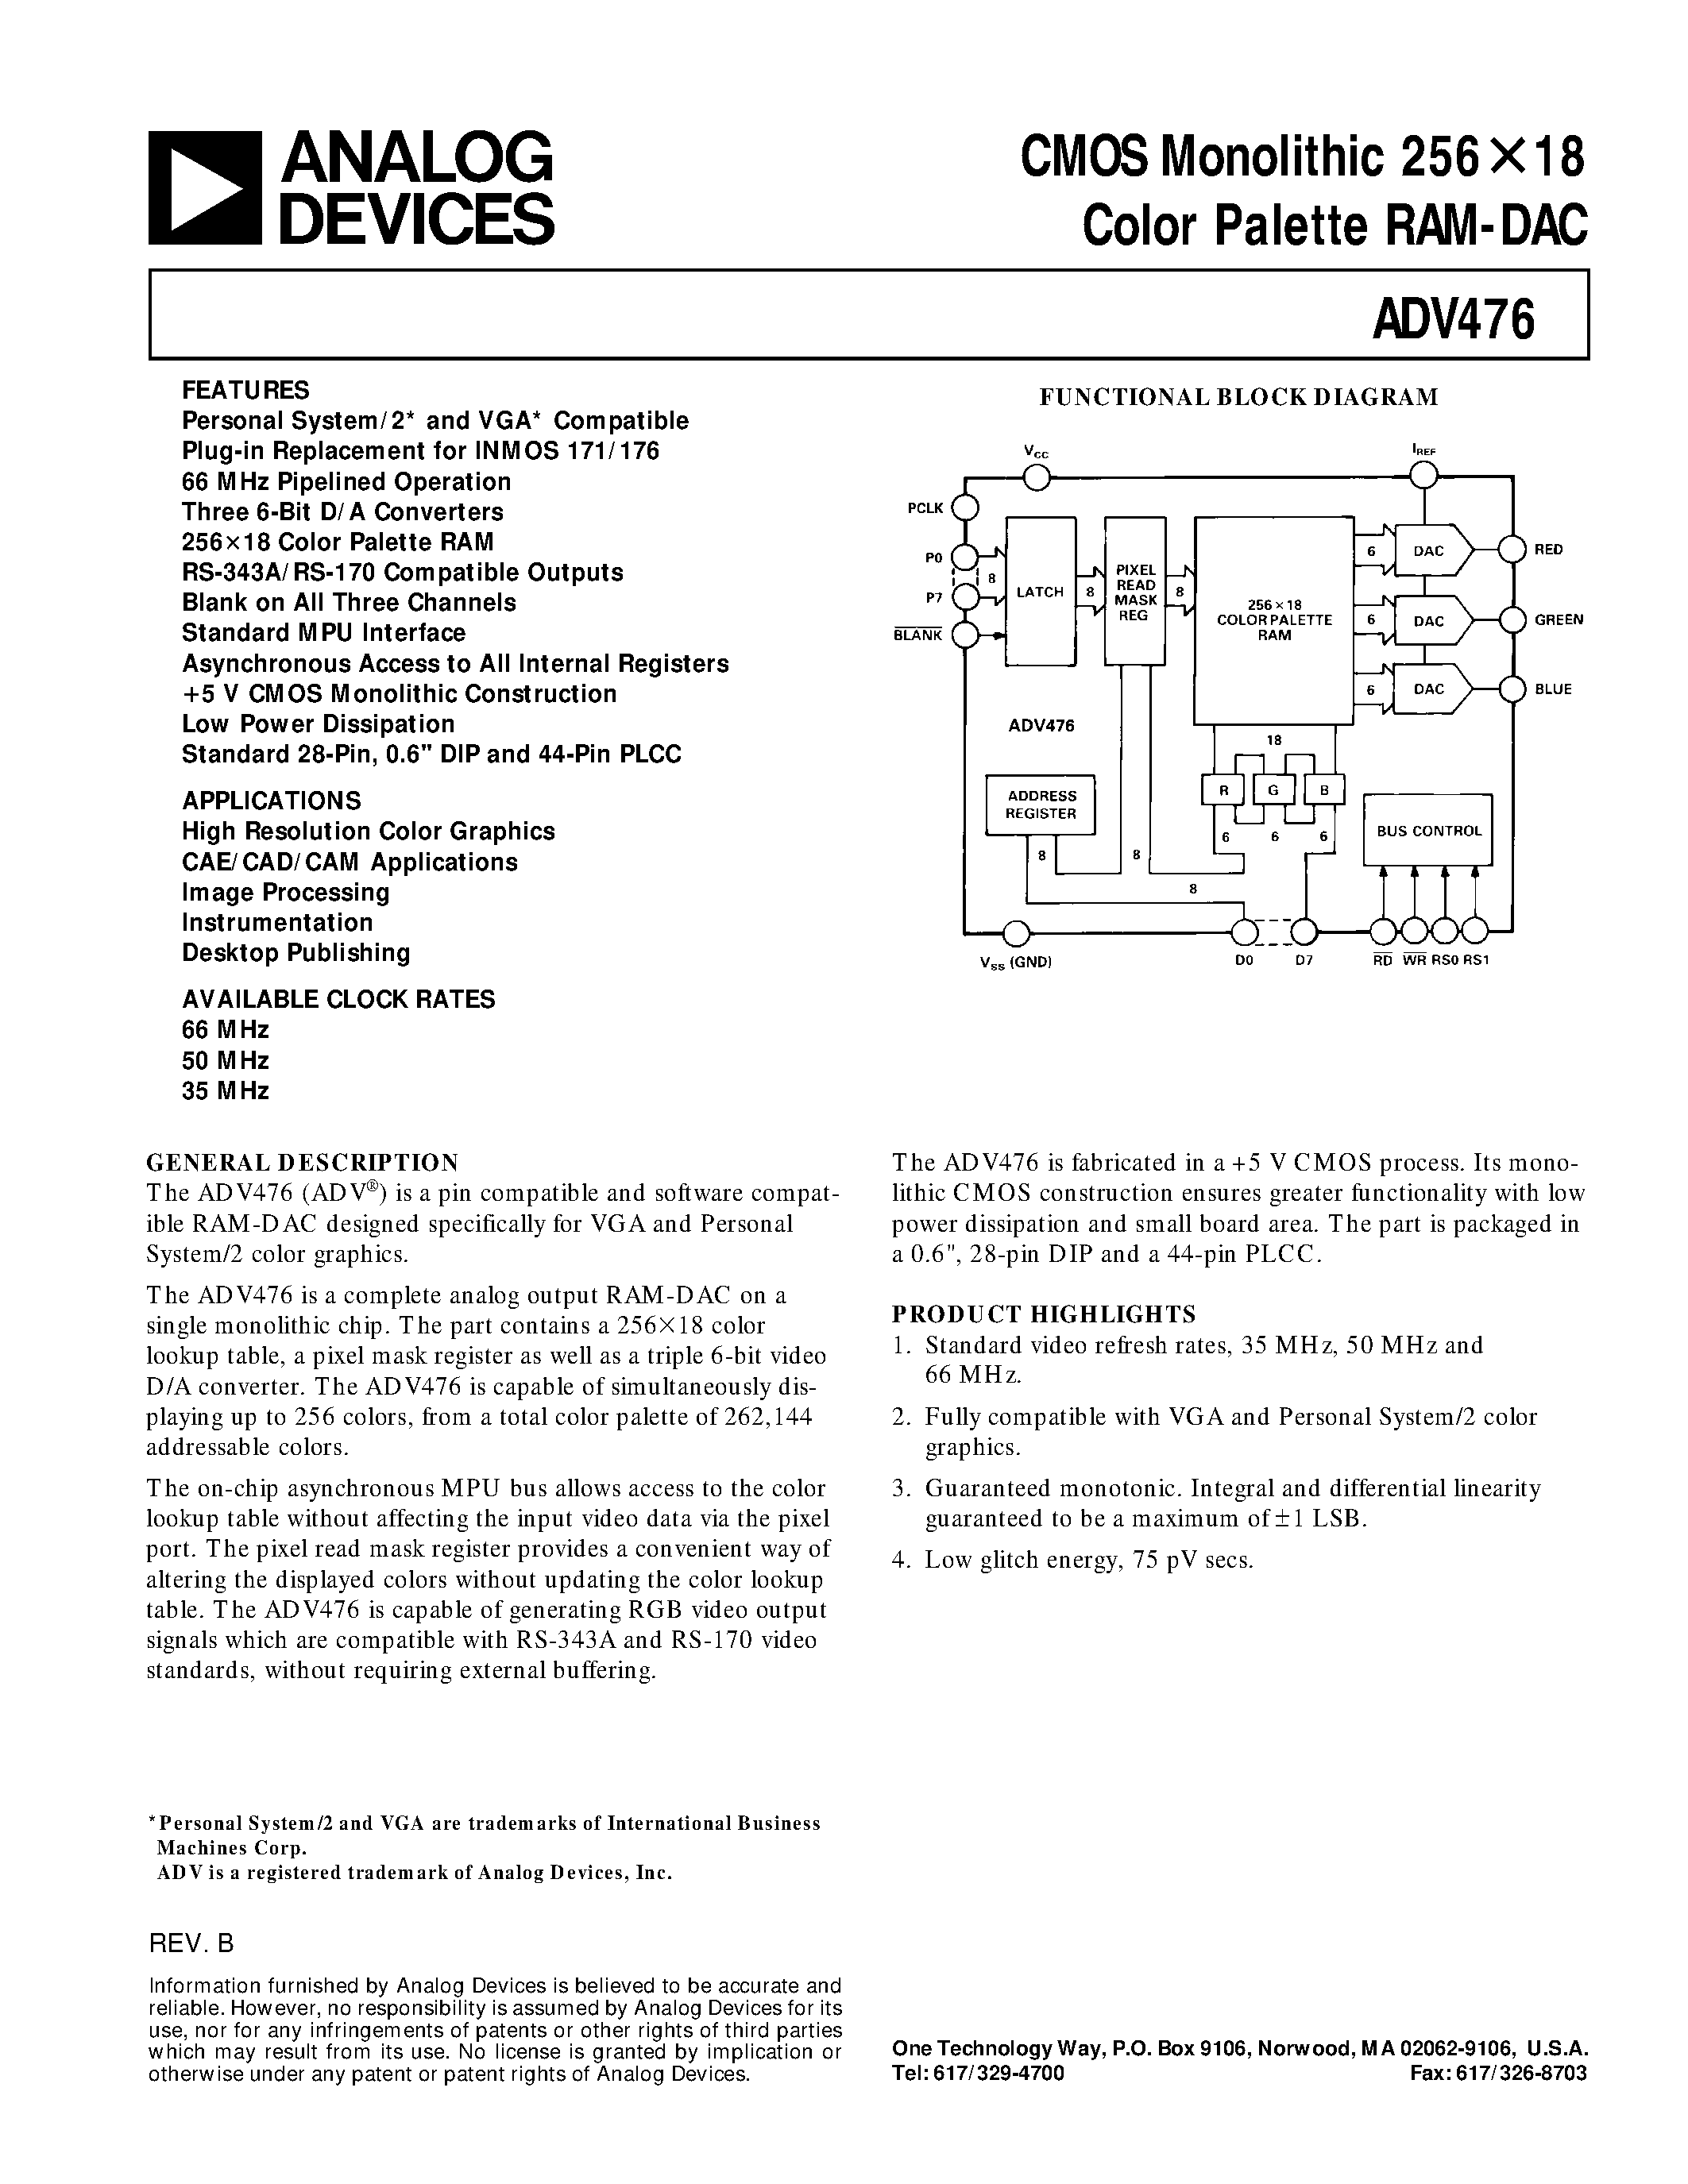 Datasheet ADV476KP50 - CMOS Monolithic 256x18 Color Palette RAM-DAC page 1